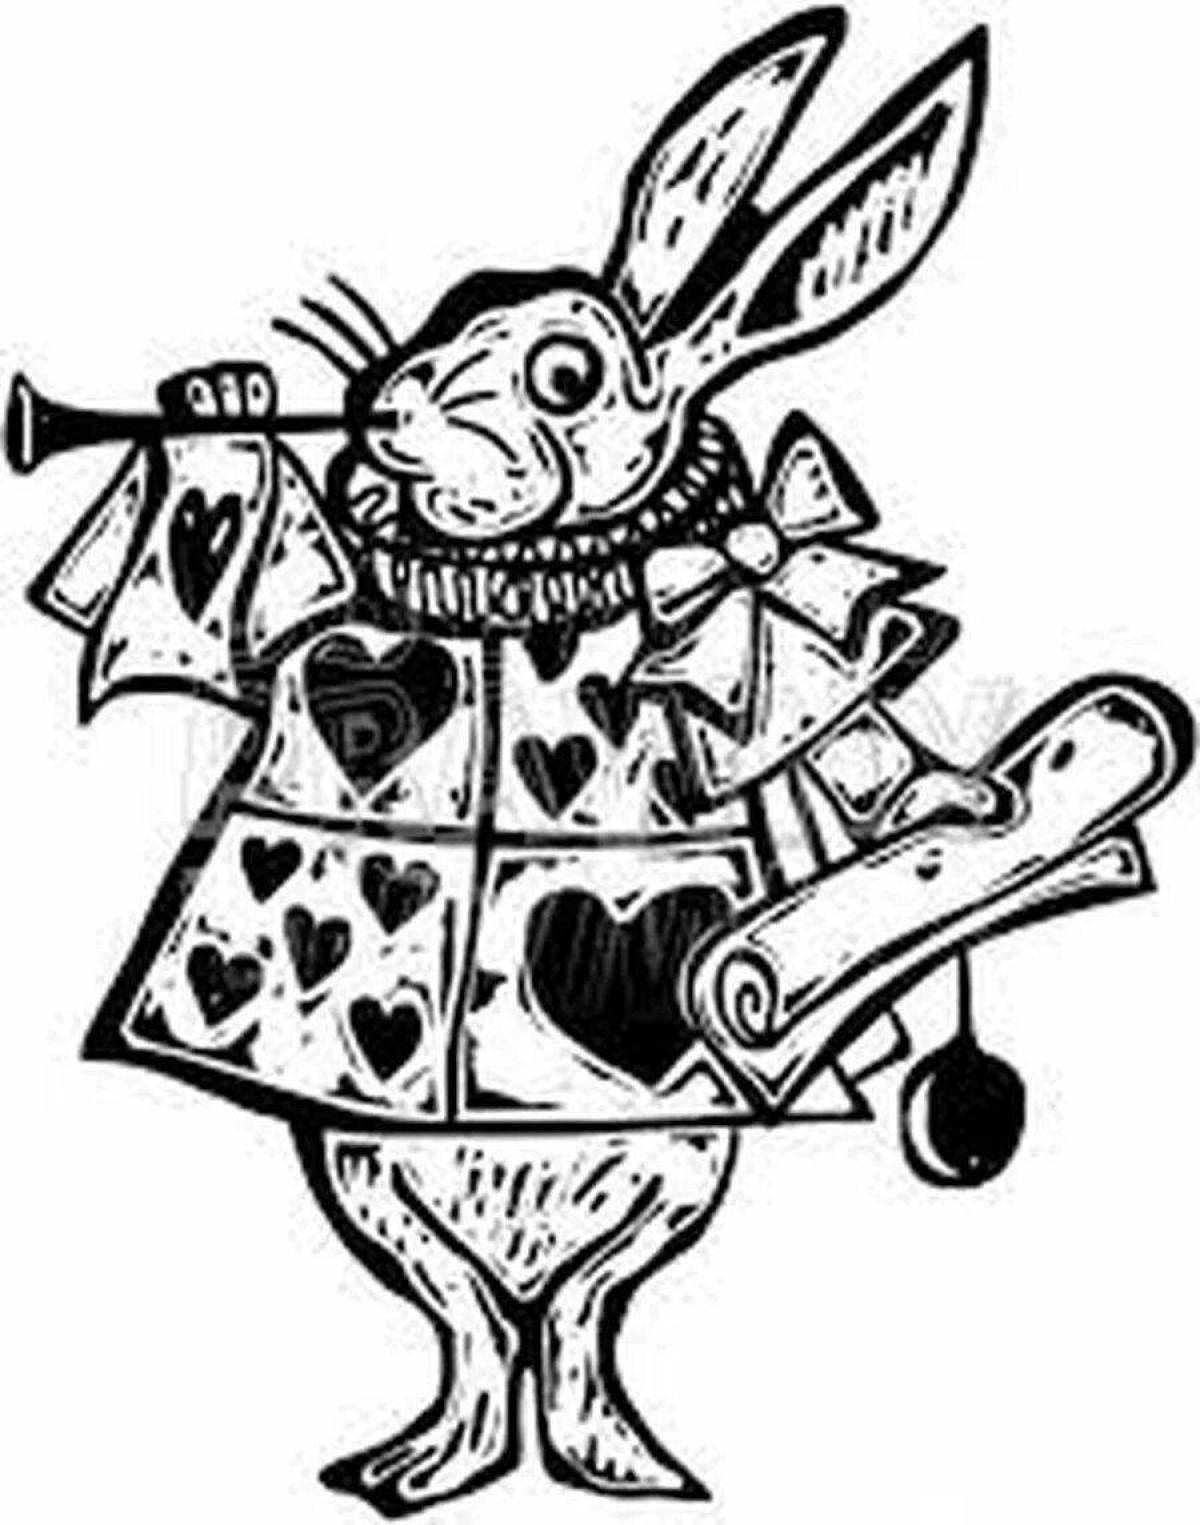 Sly rabbit from Alice in Wonderland